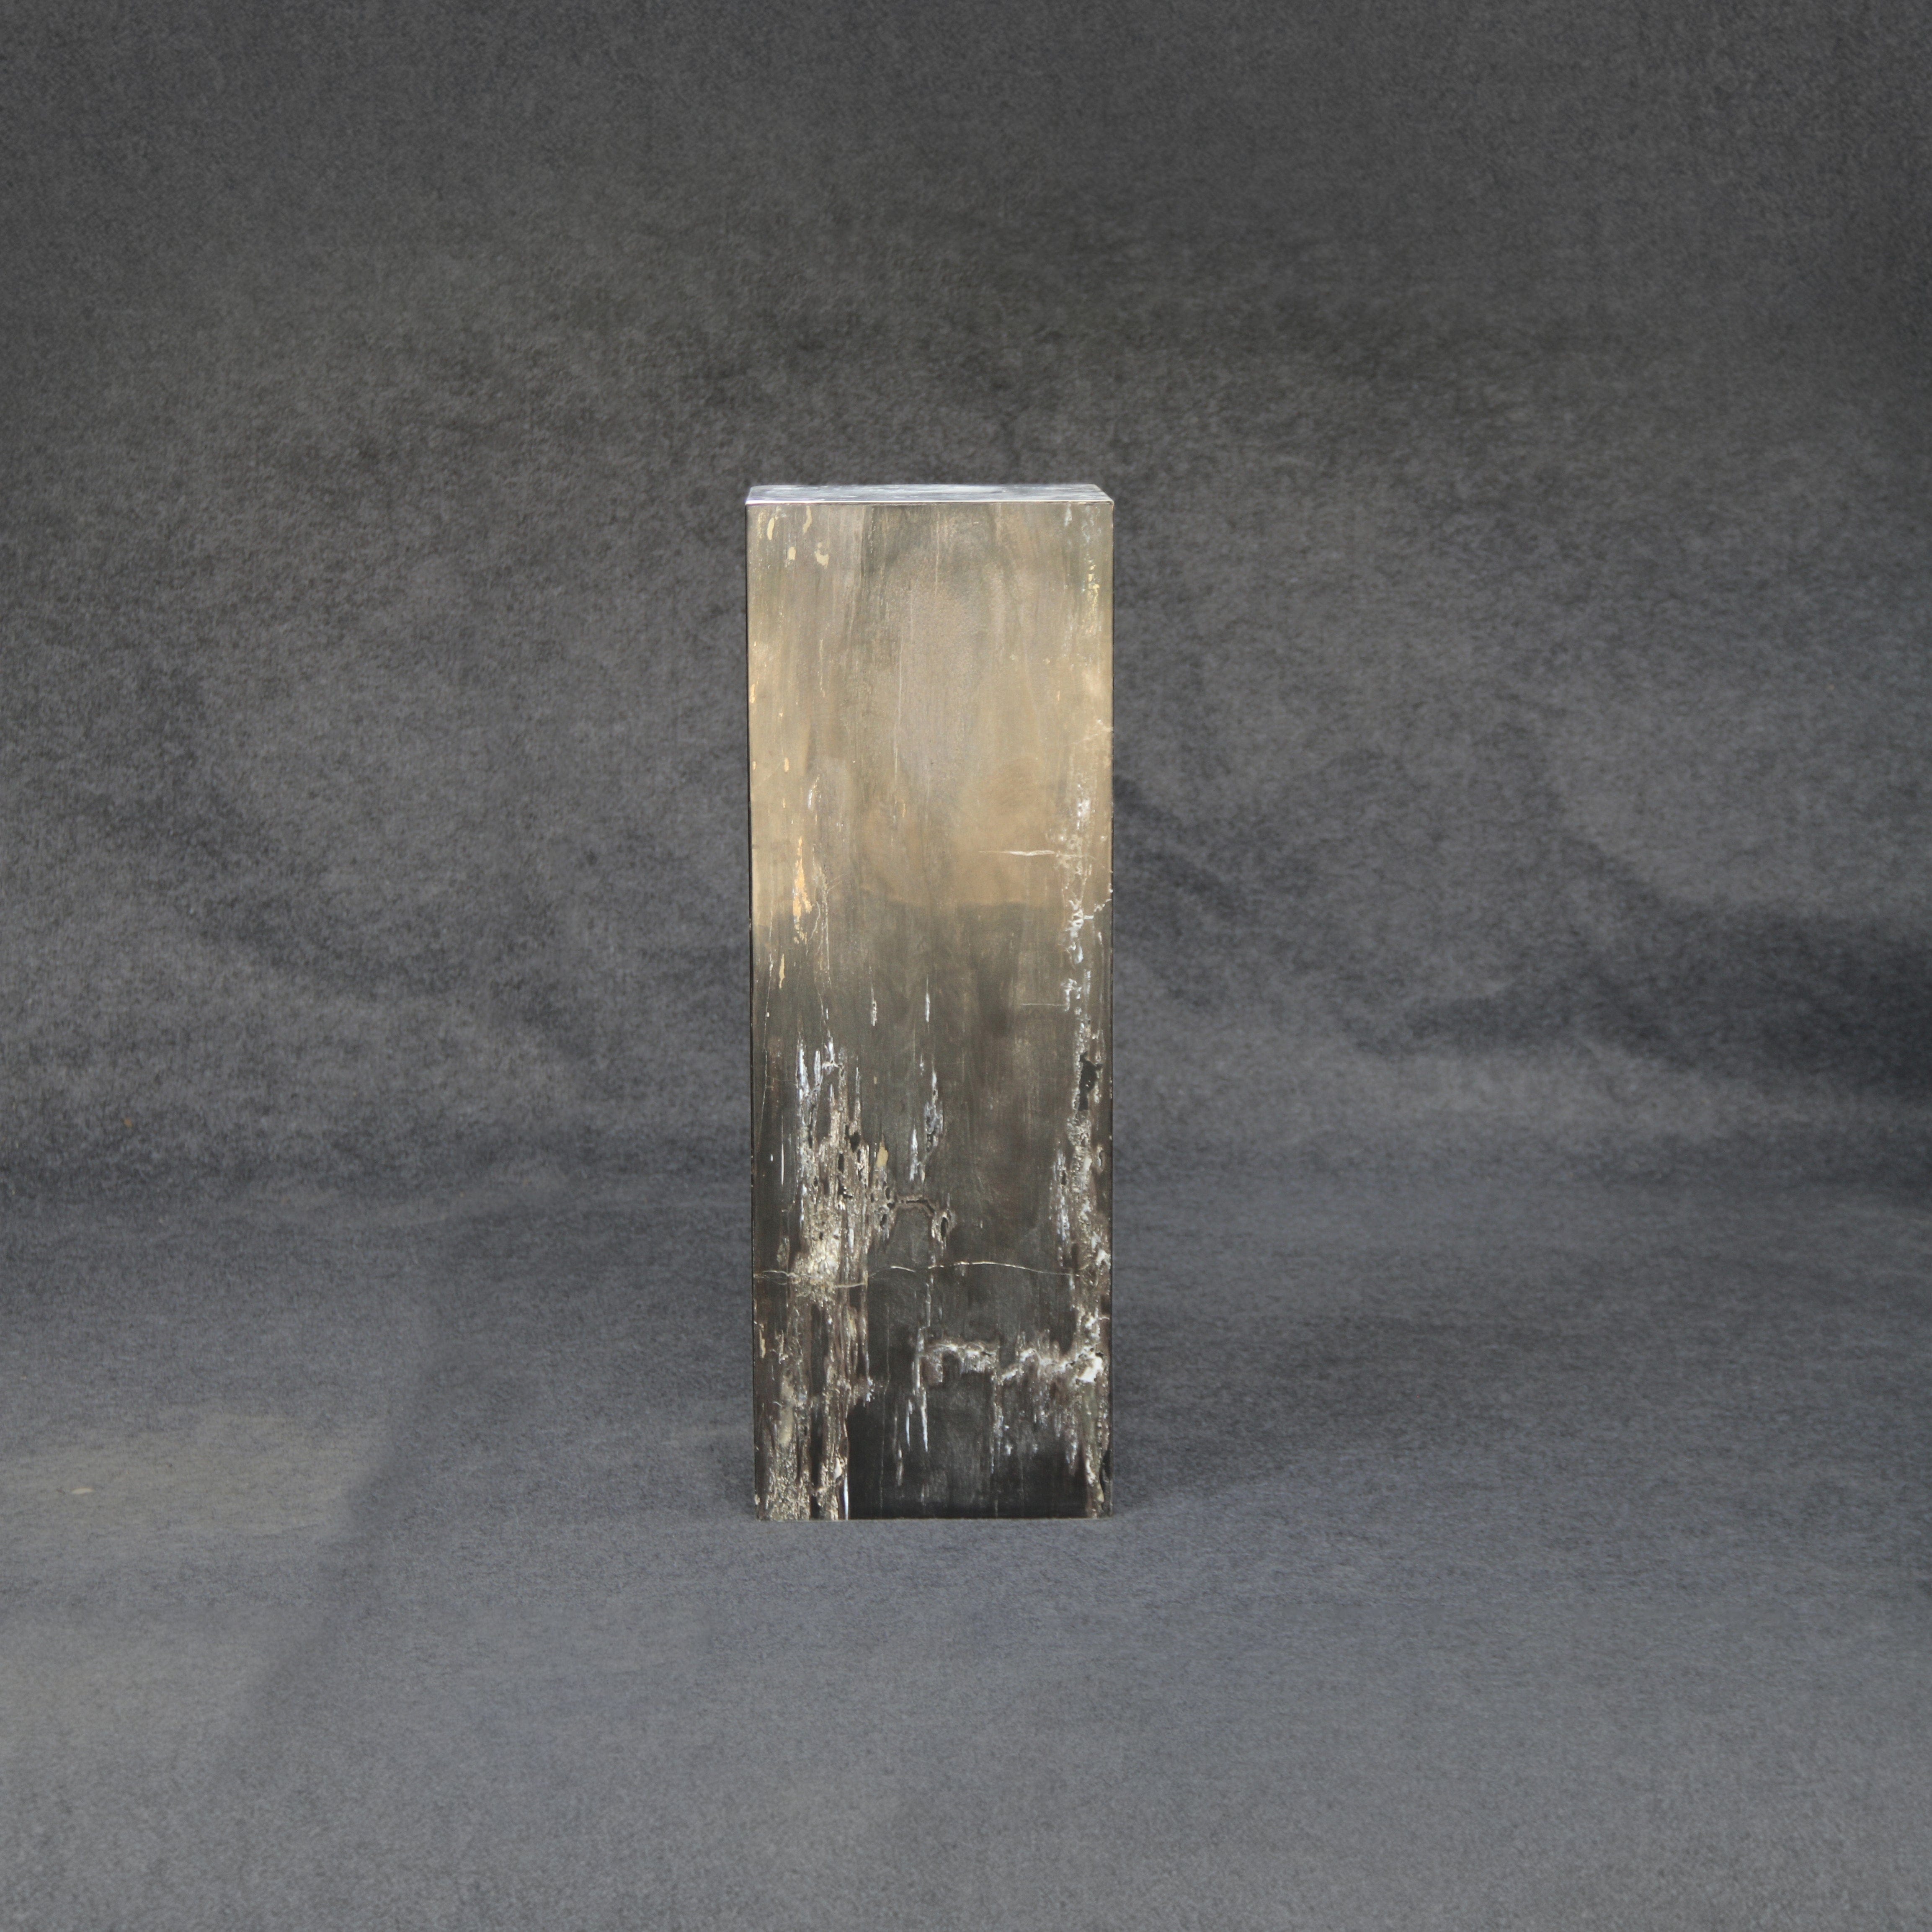 Kalifano Petrified Wood Black Petrified Wood Hollow Square Pedestal 39" / 172 lbs PWP8000.030